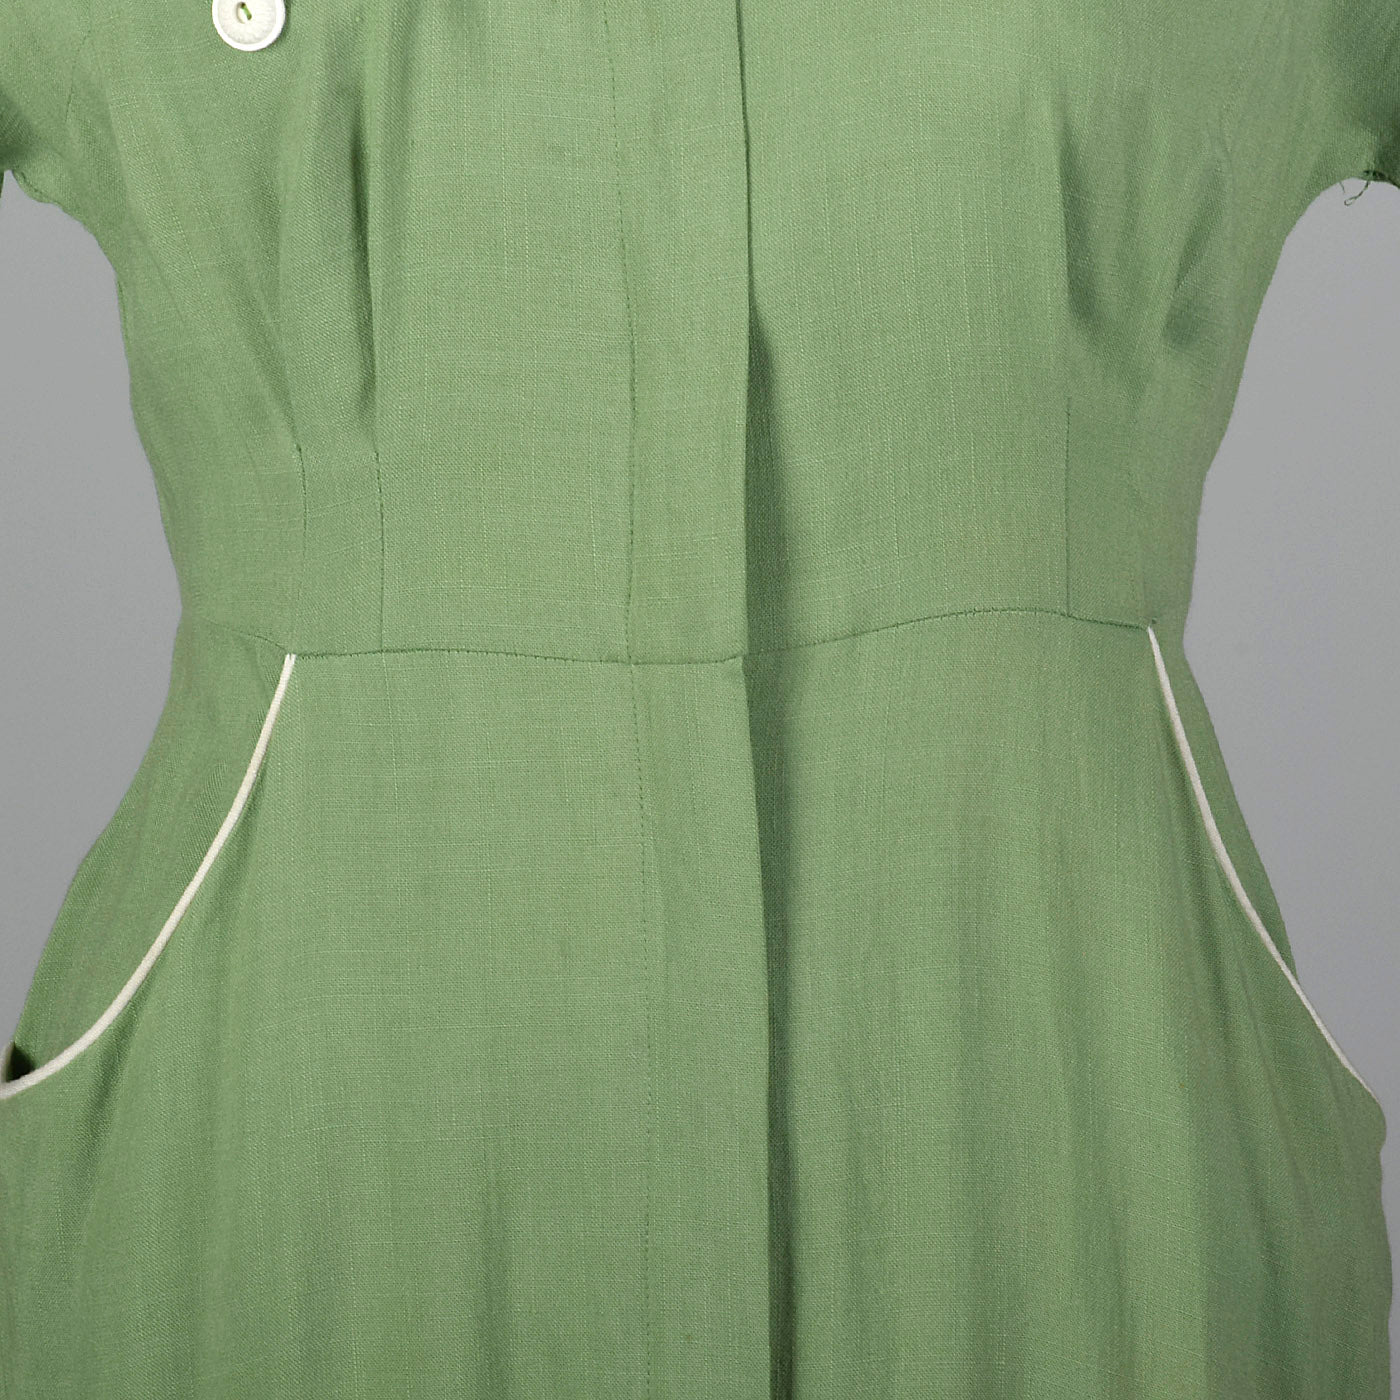 1950s Green Rayon Day Dress